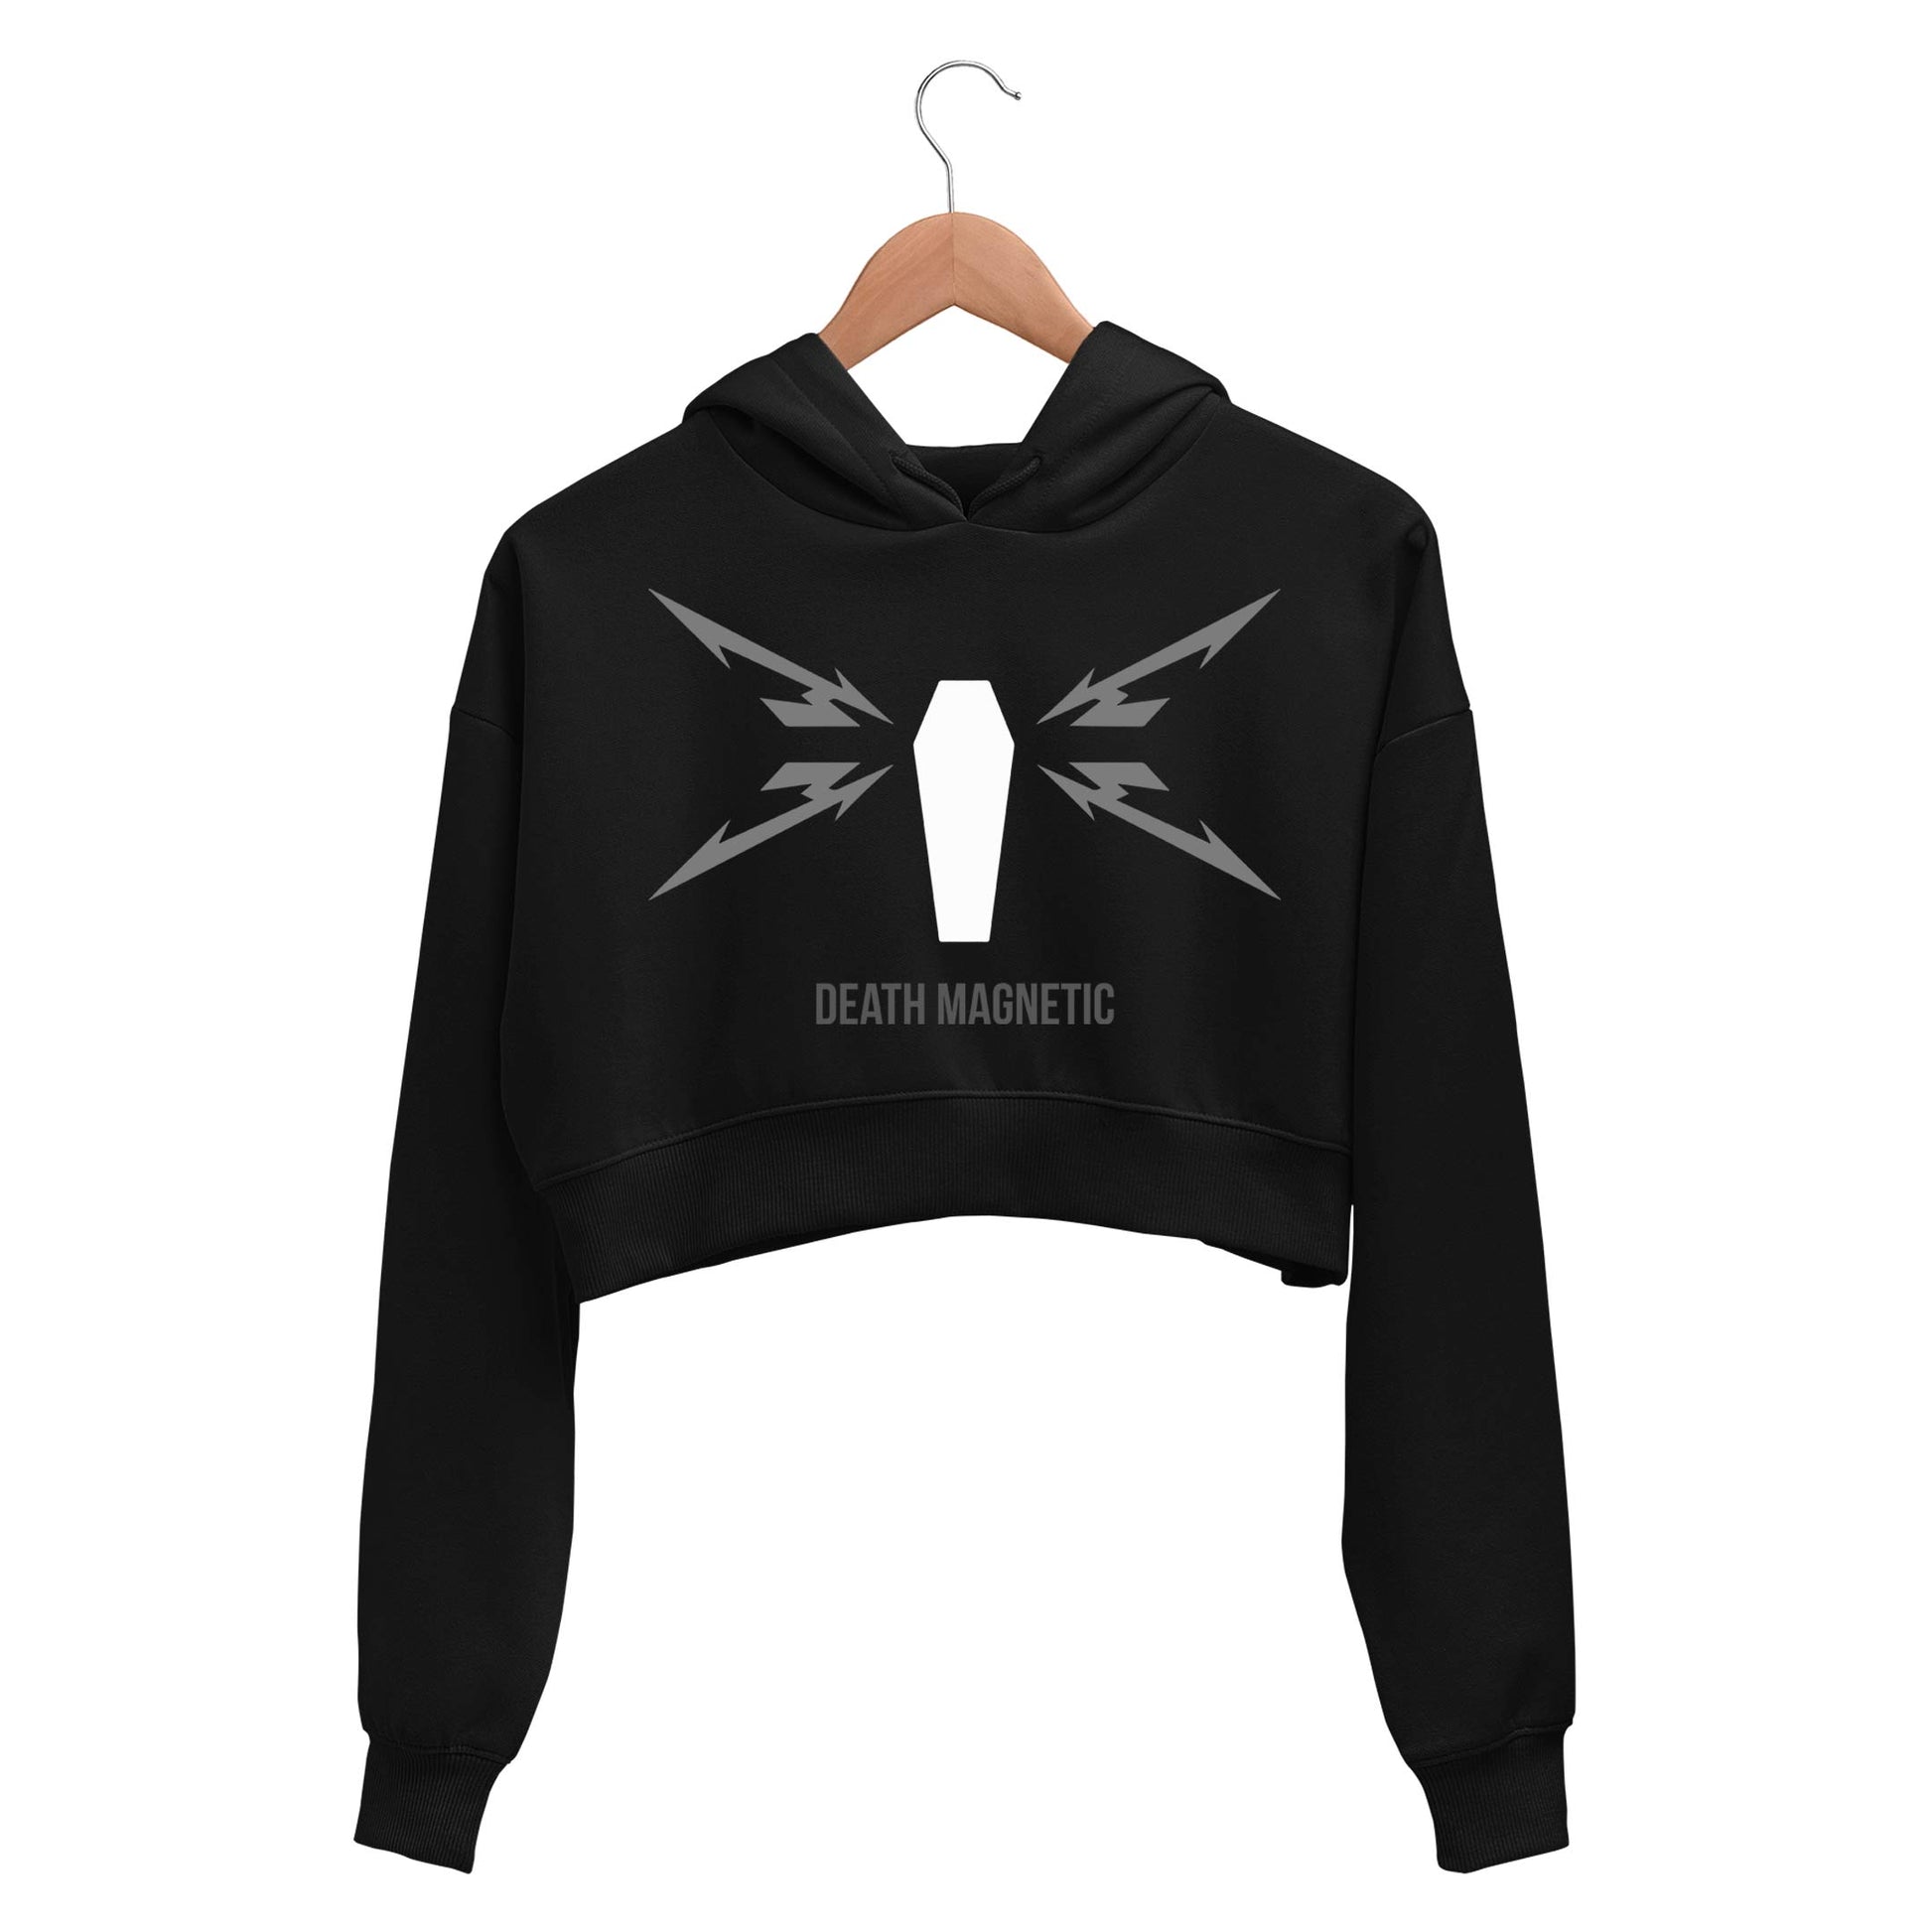 Metallica Crop Hoodie Merchandise Clothing Apparel - Death Magnetic Crop Hooded Sweatshirt for Women The Banyan Tee TBT